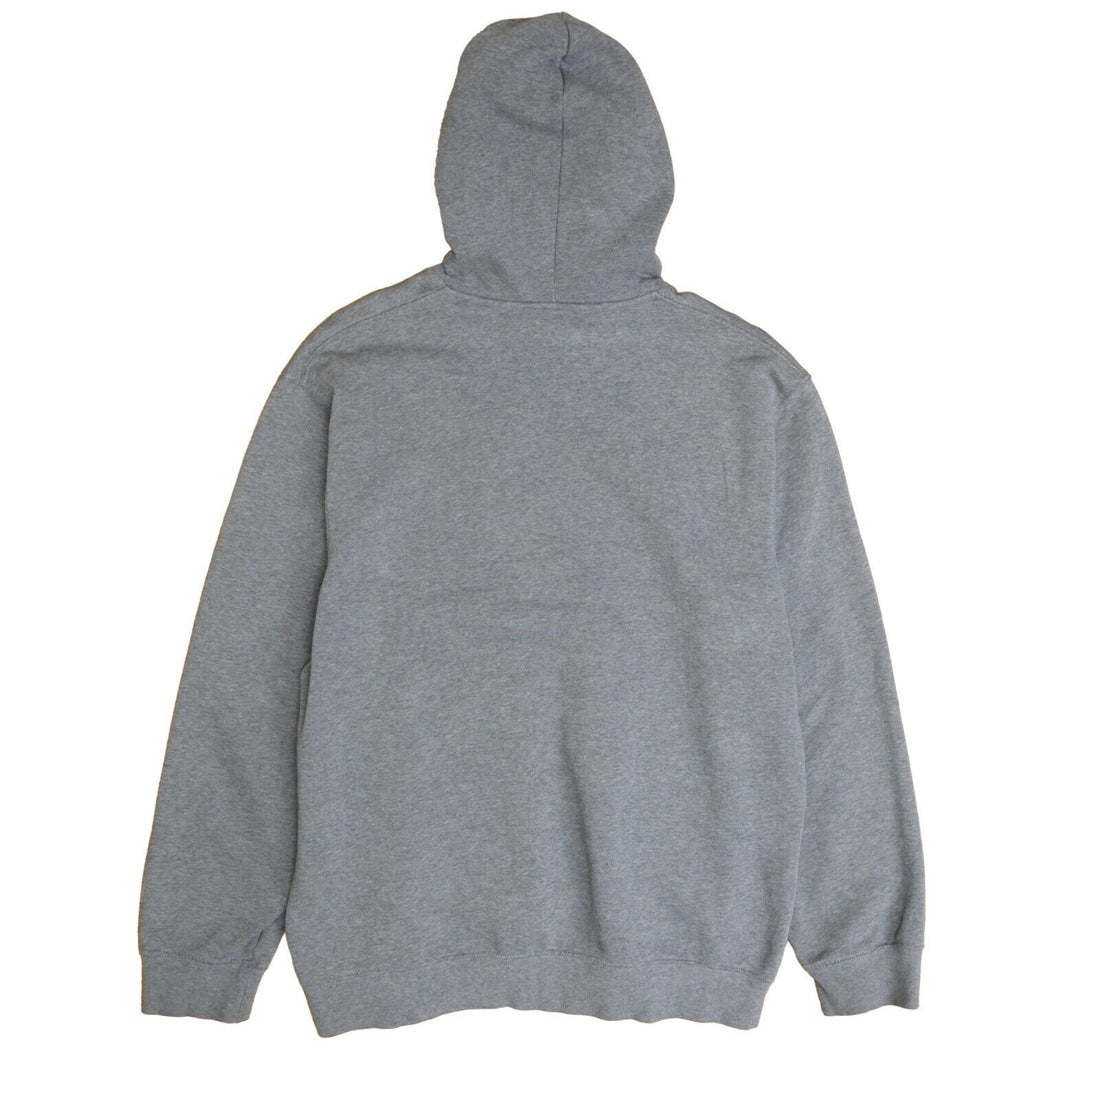 Vintage Nike Sweatshirt Hoodie Size Large Gray Embroidered Swoosh